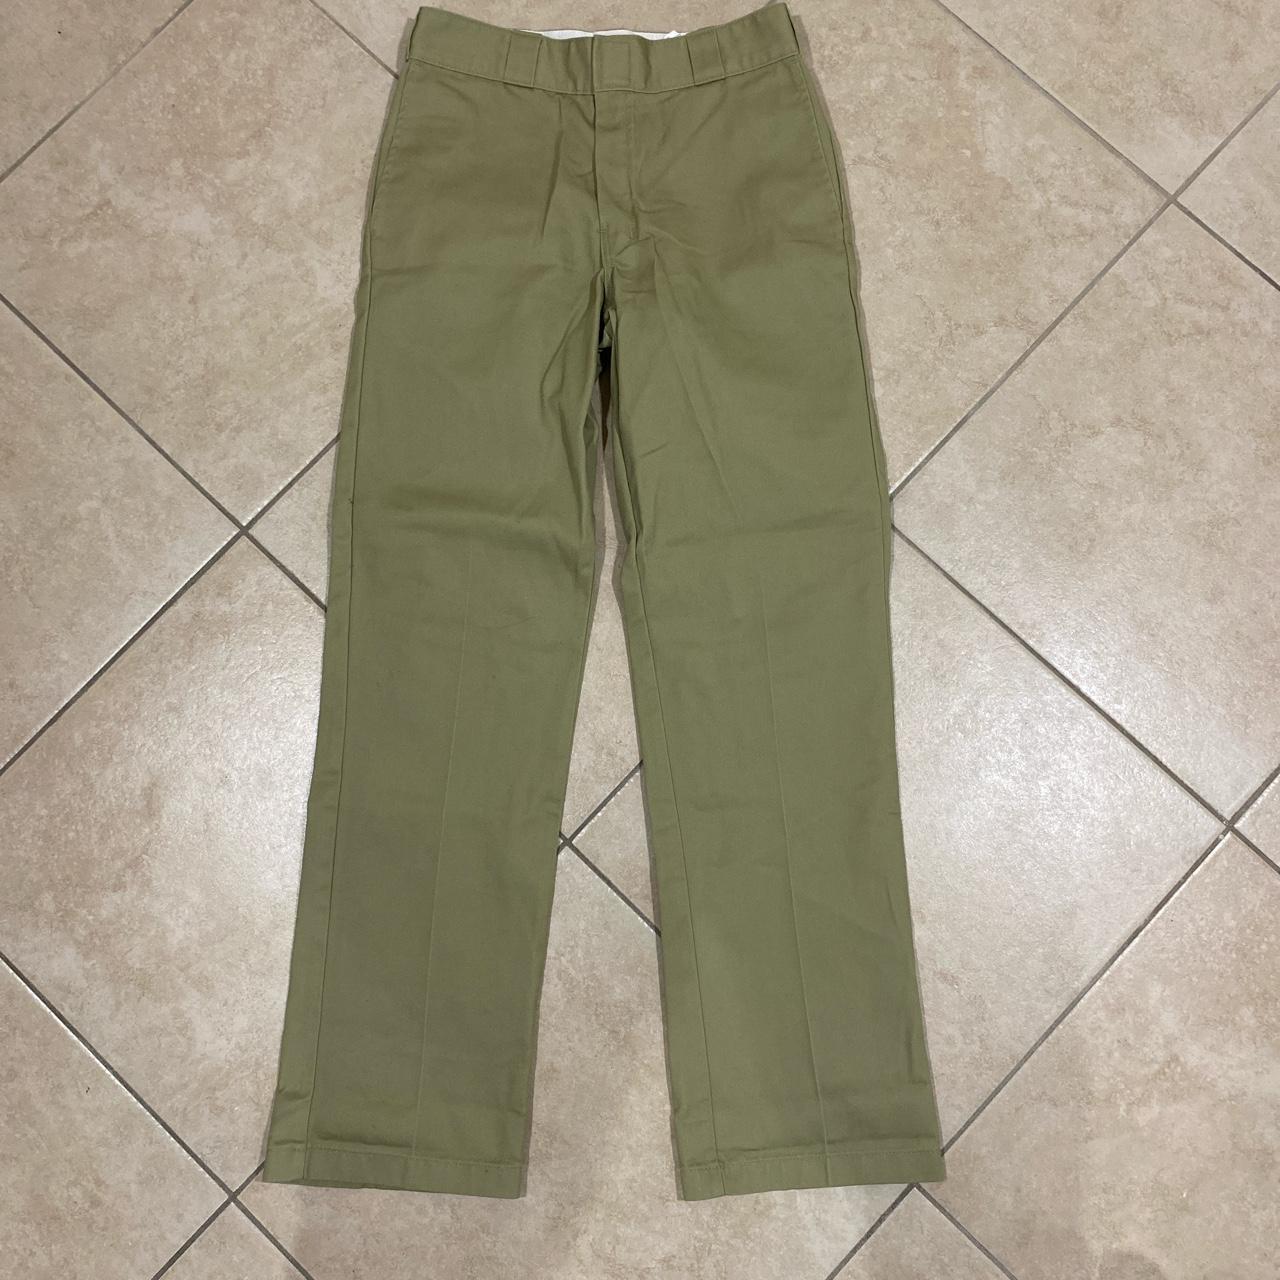 vintage dickies 874 olive green pants great fit and... - Depop